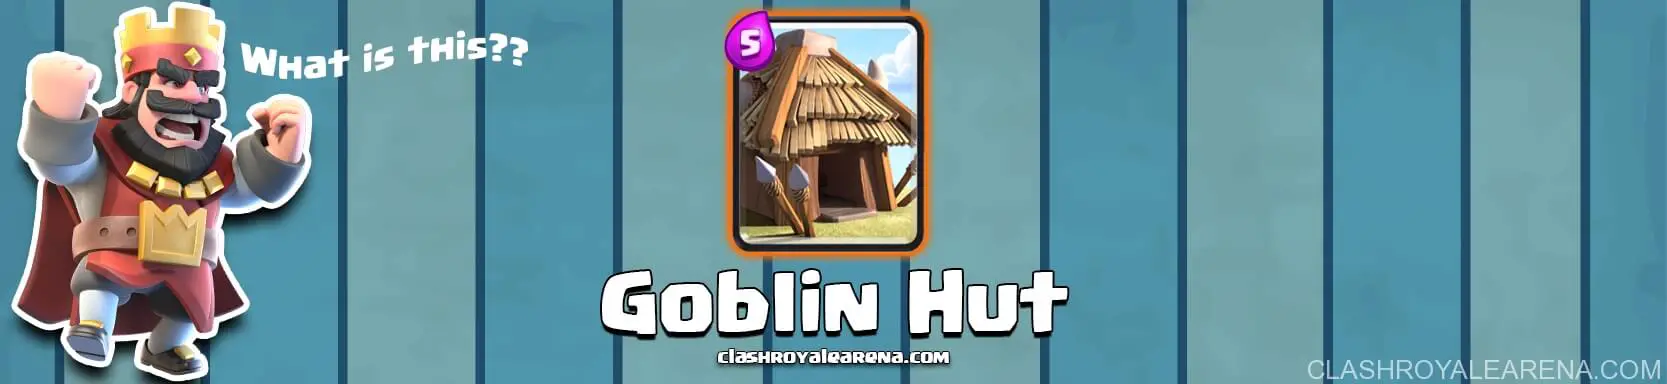 goblin-hut-clash-royale